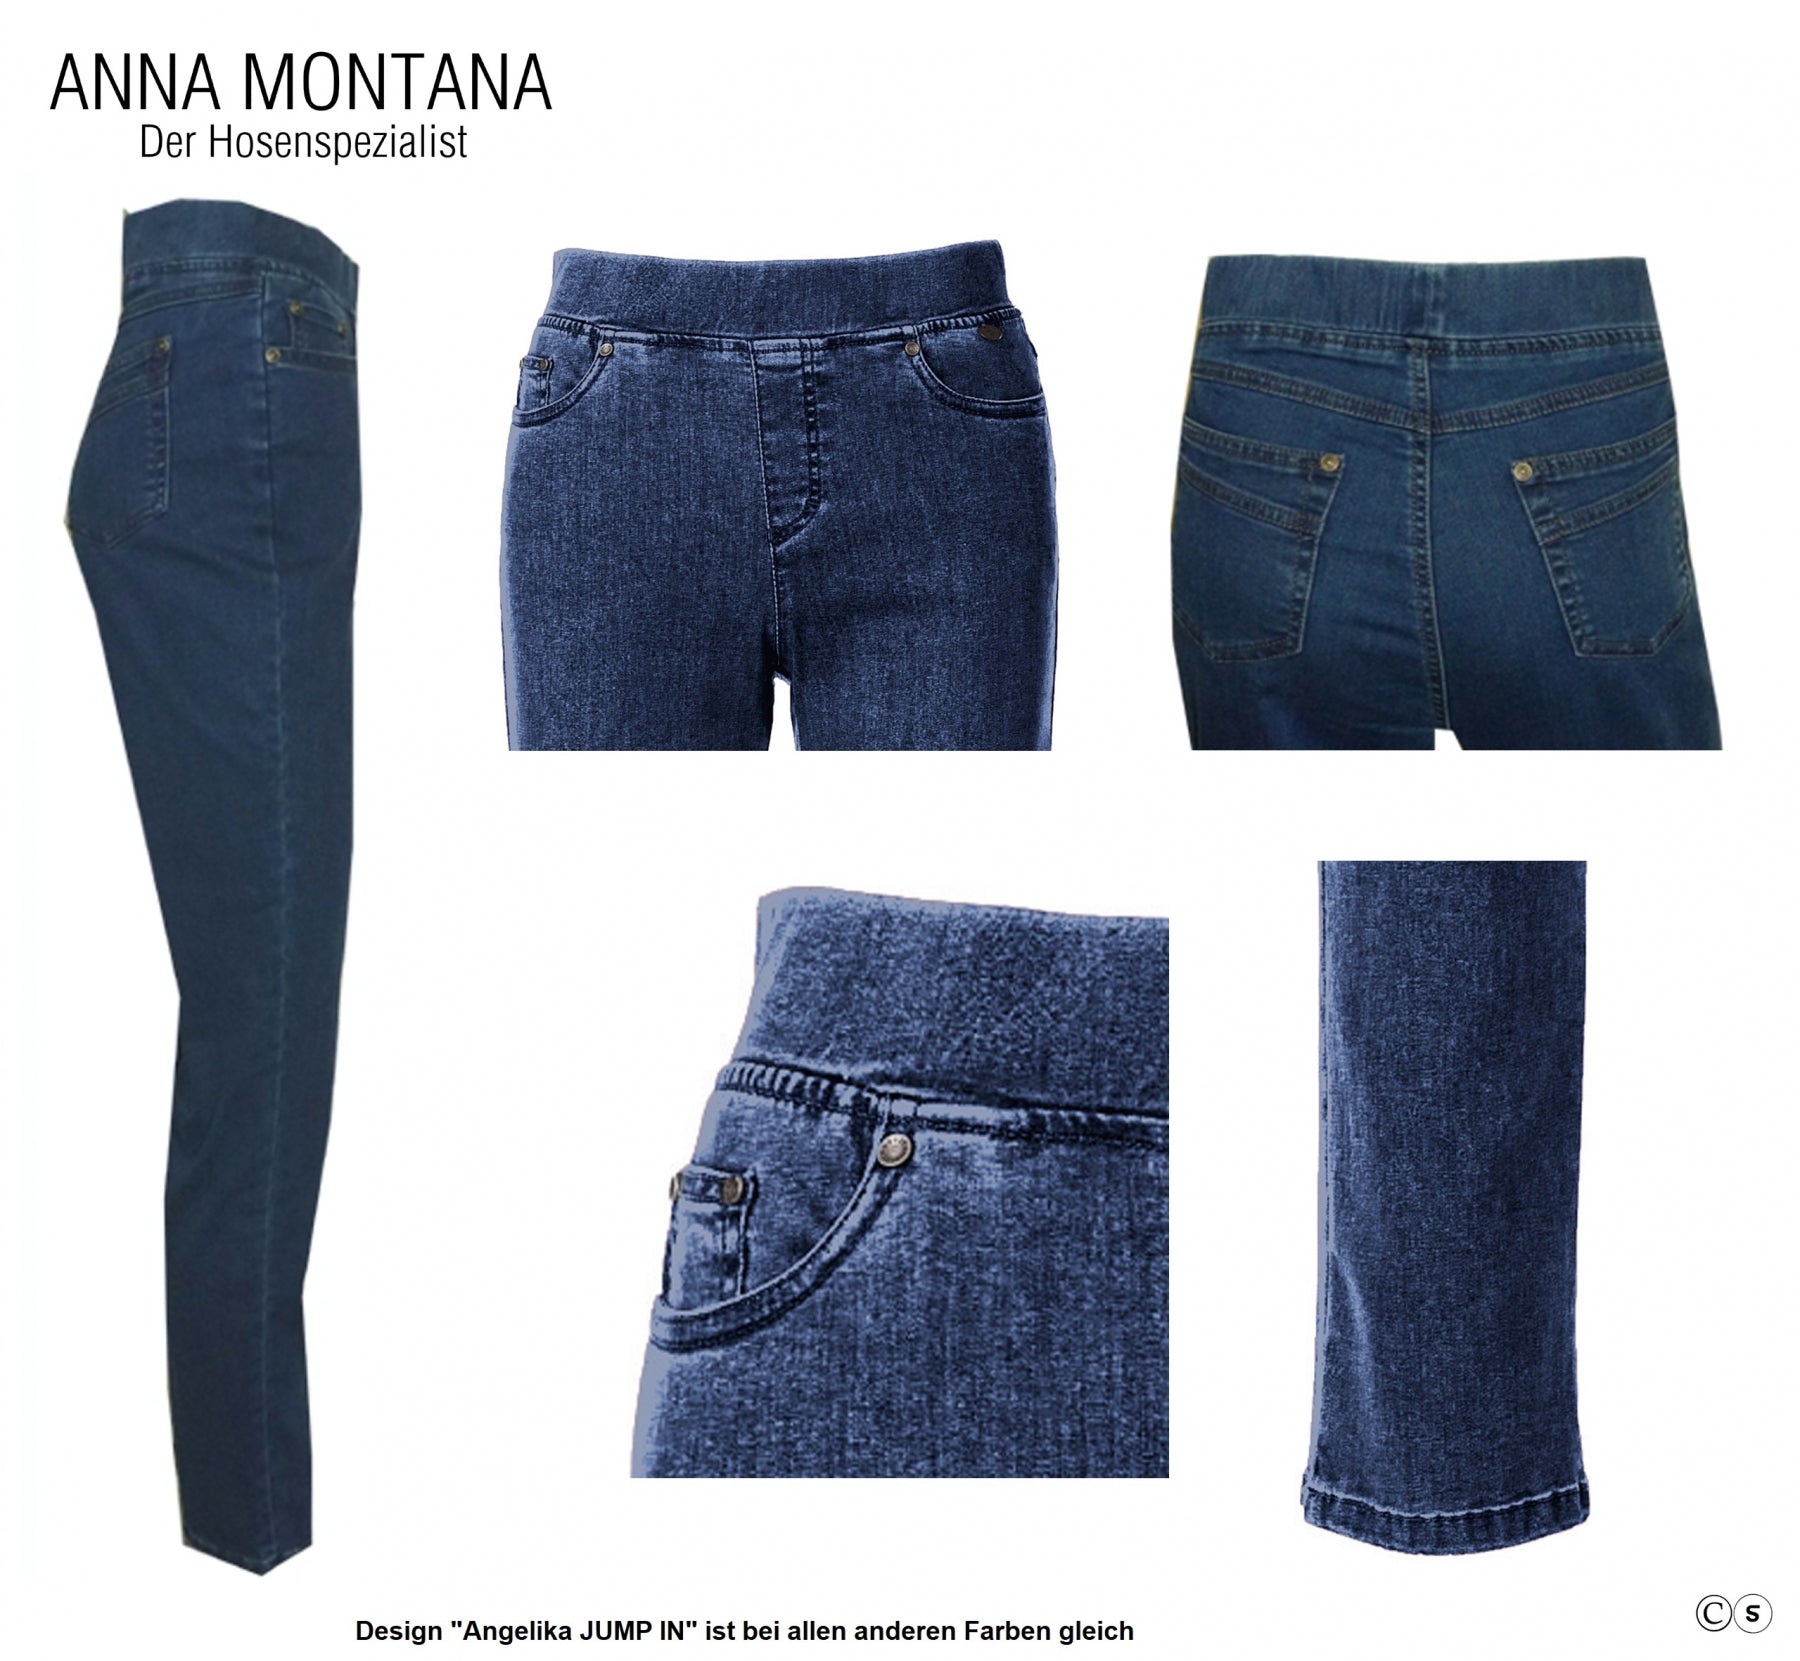 Magic Jeans - ANNA MONTANA - Der Hosenspezialist